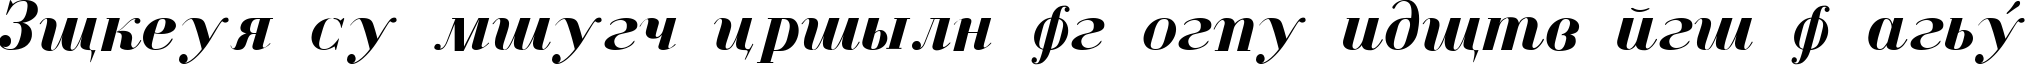 Пример написания шрифтом Cyrillic Bold-Italic текста на французском